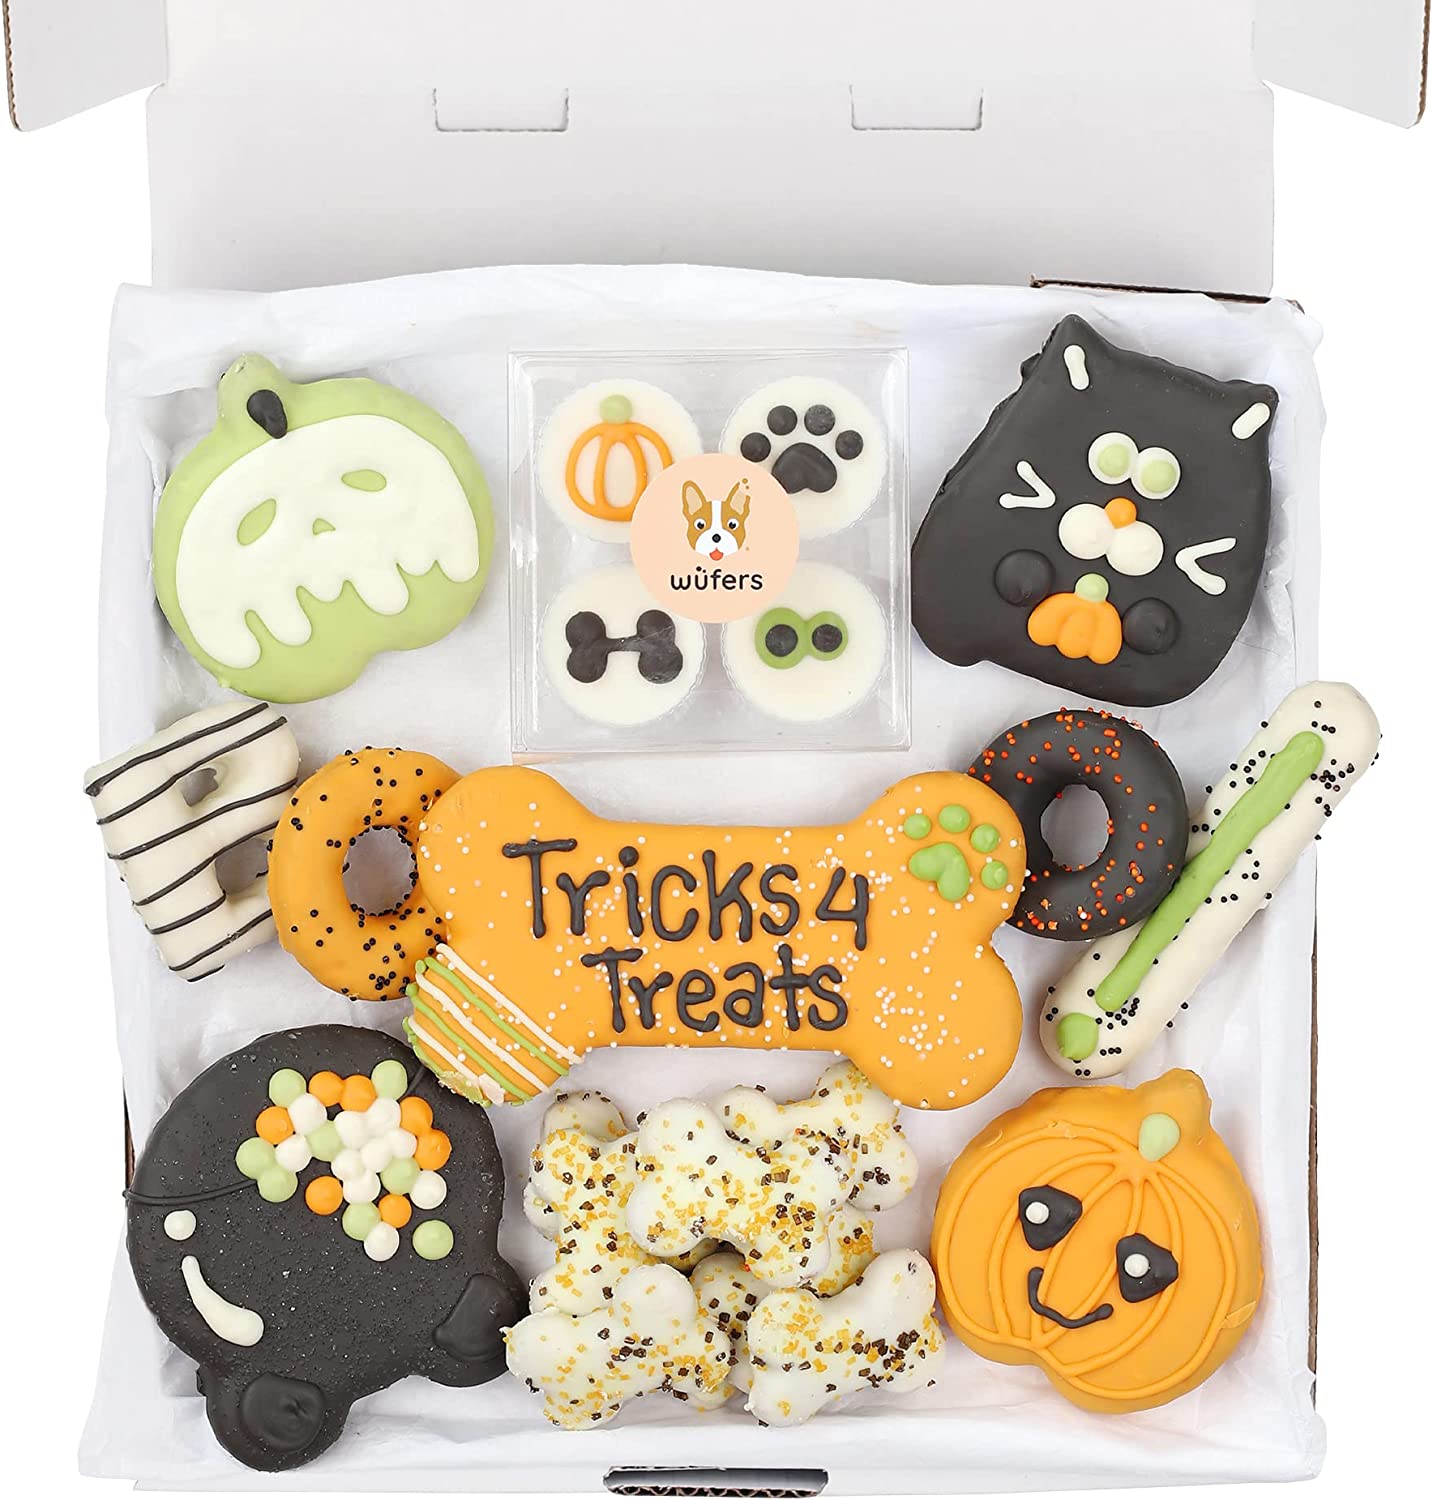  5. Trader Joes Halloween Haunted House Cookie Kit 